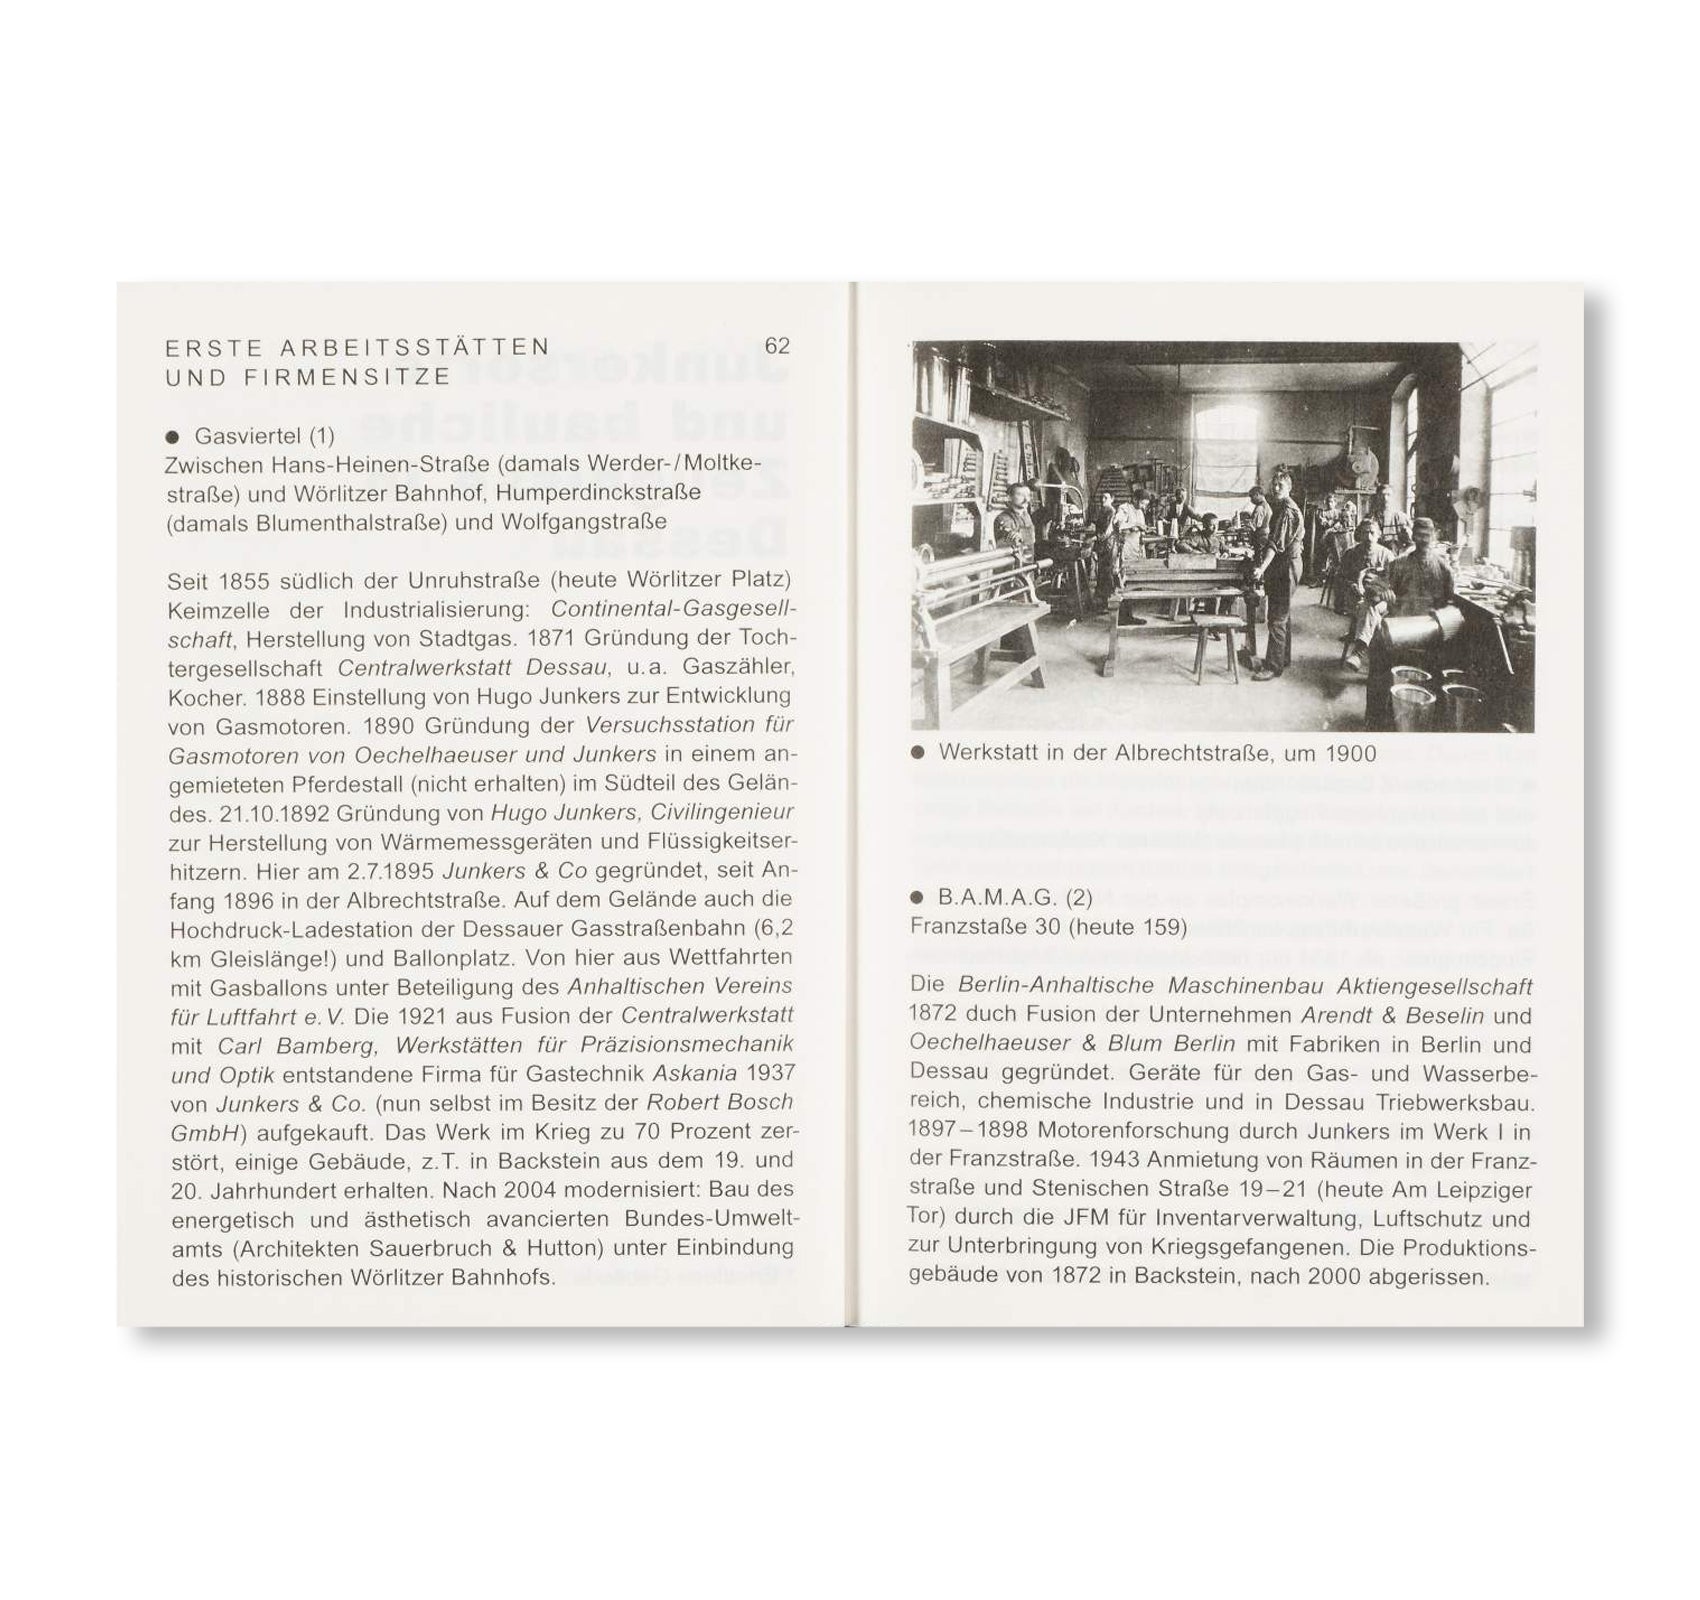 JUNKERS BAUT. EINE SPURENSUCHE - Bauhaus Paperback 13 by Sven Tornack, Andreas Butter, Stiftung Bauhaus Dessau [GERMAN EDITION]